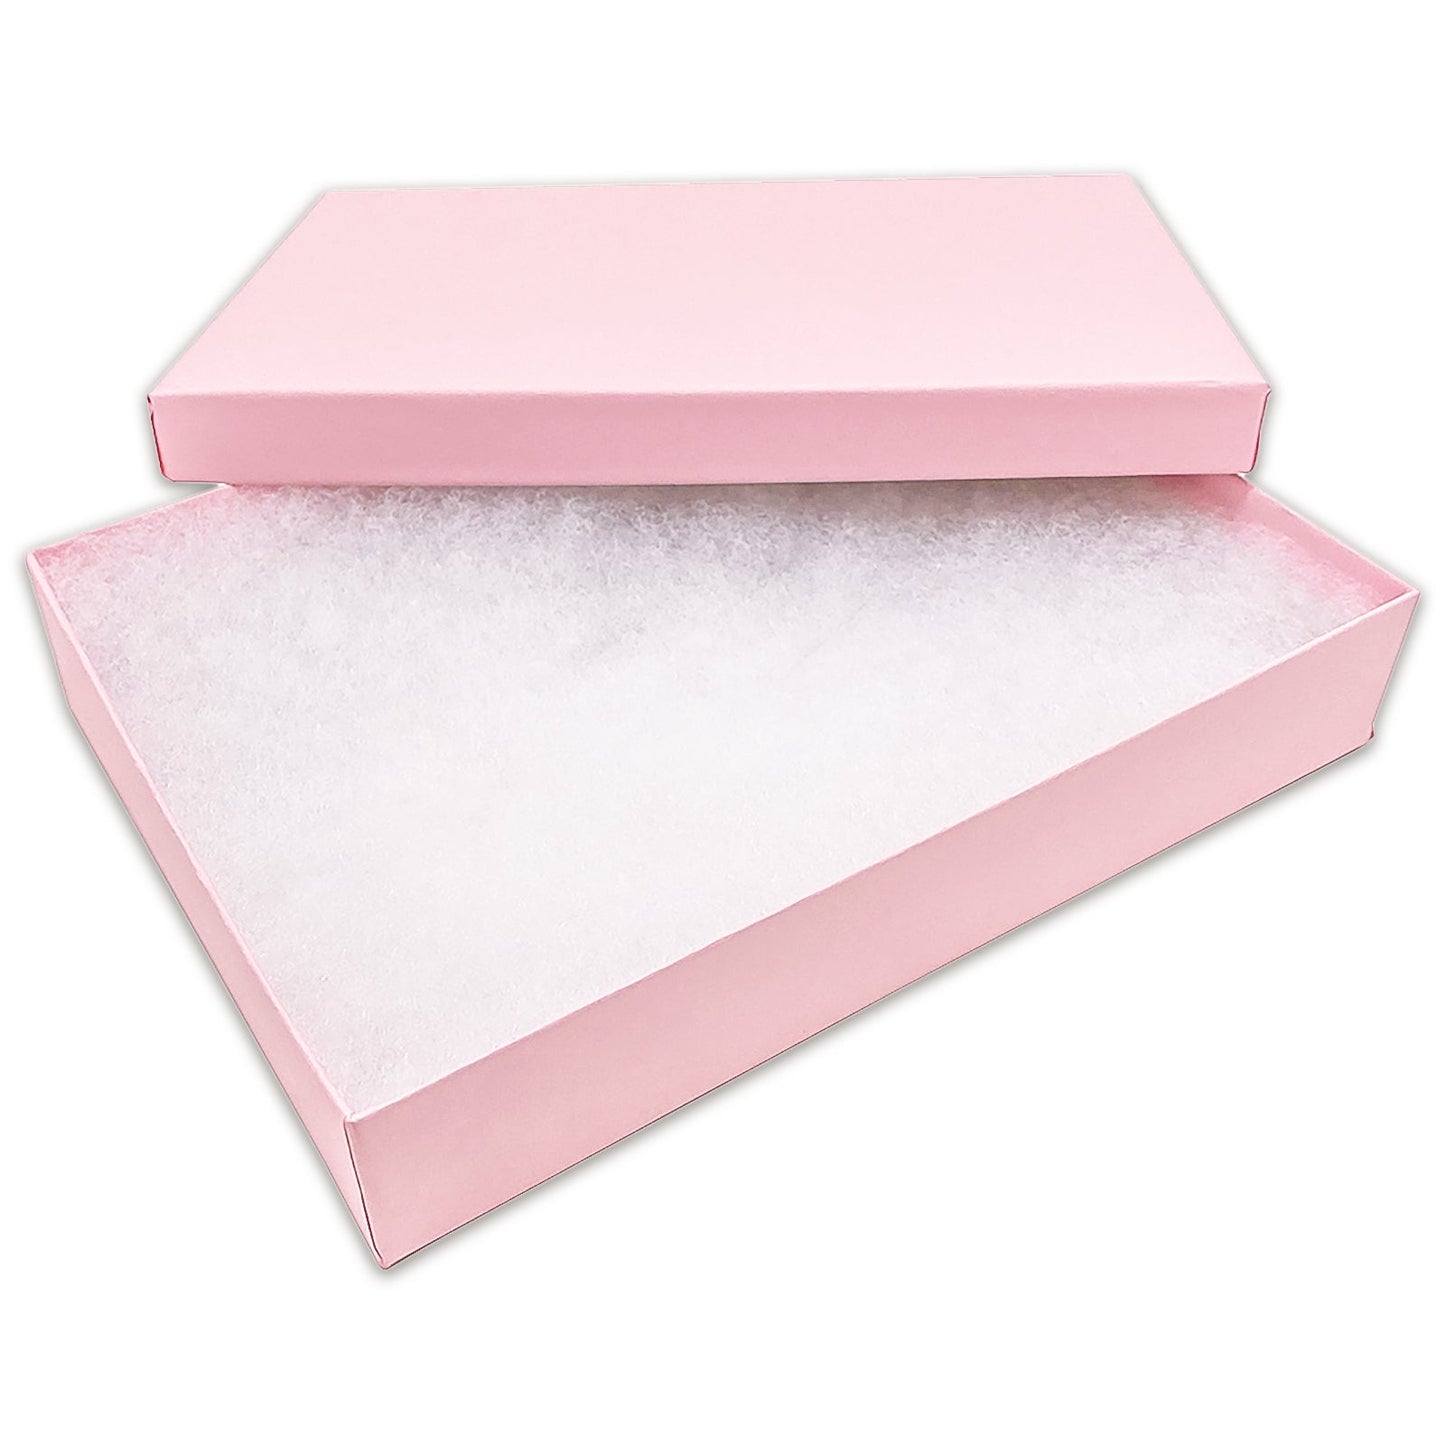 #75 - 7 1/8" x 5 1/8" x 1 1/8"H Pink Cotton Filled Box